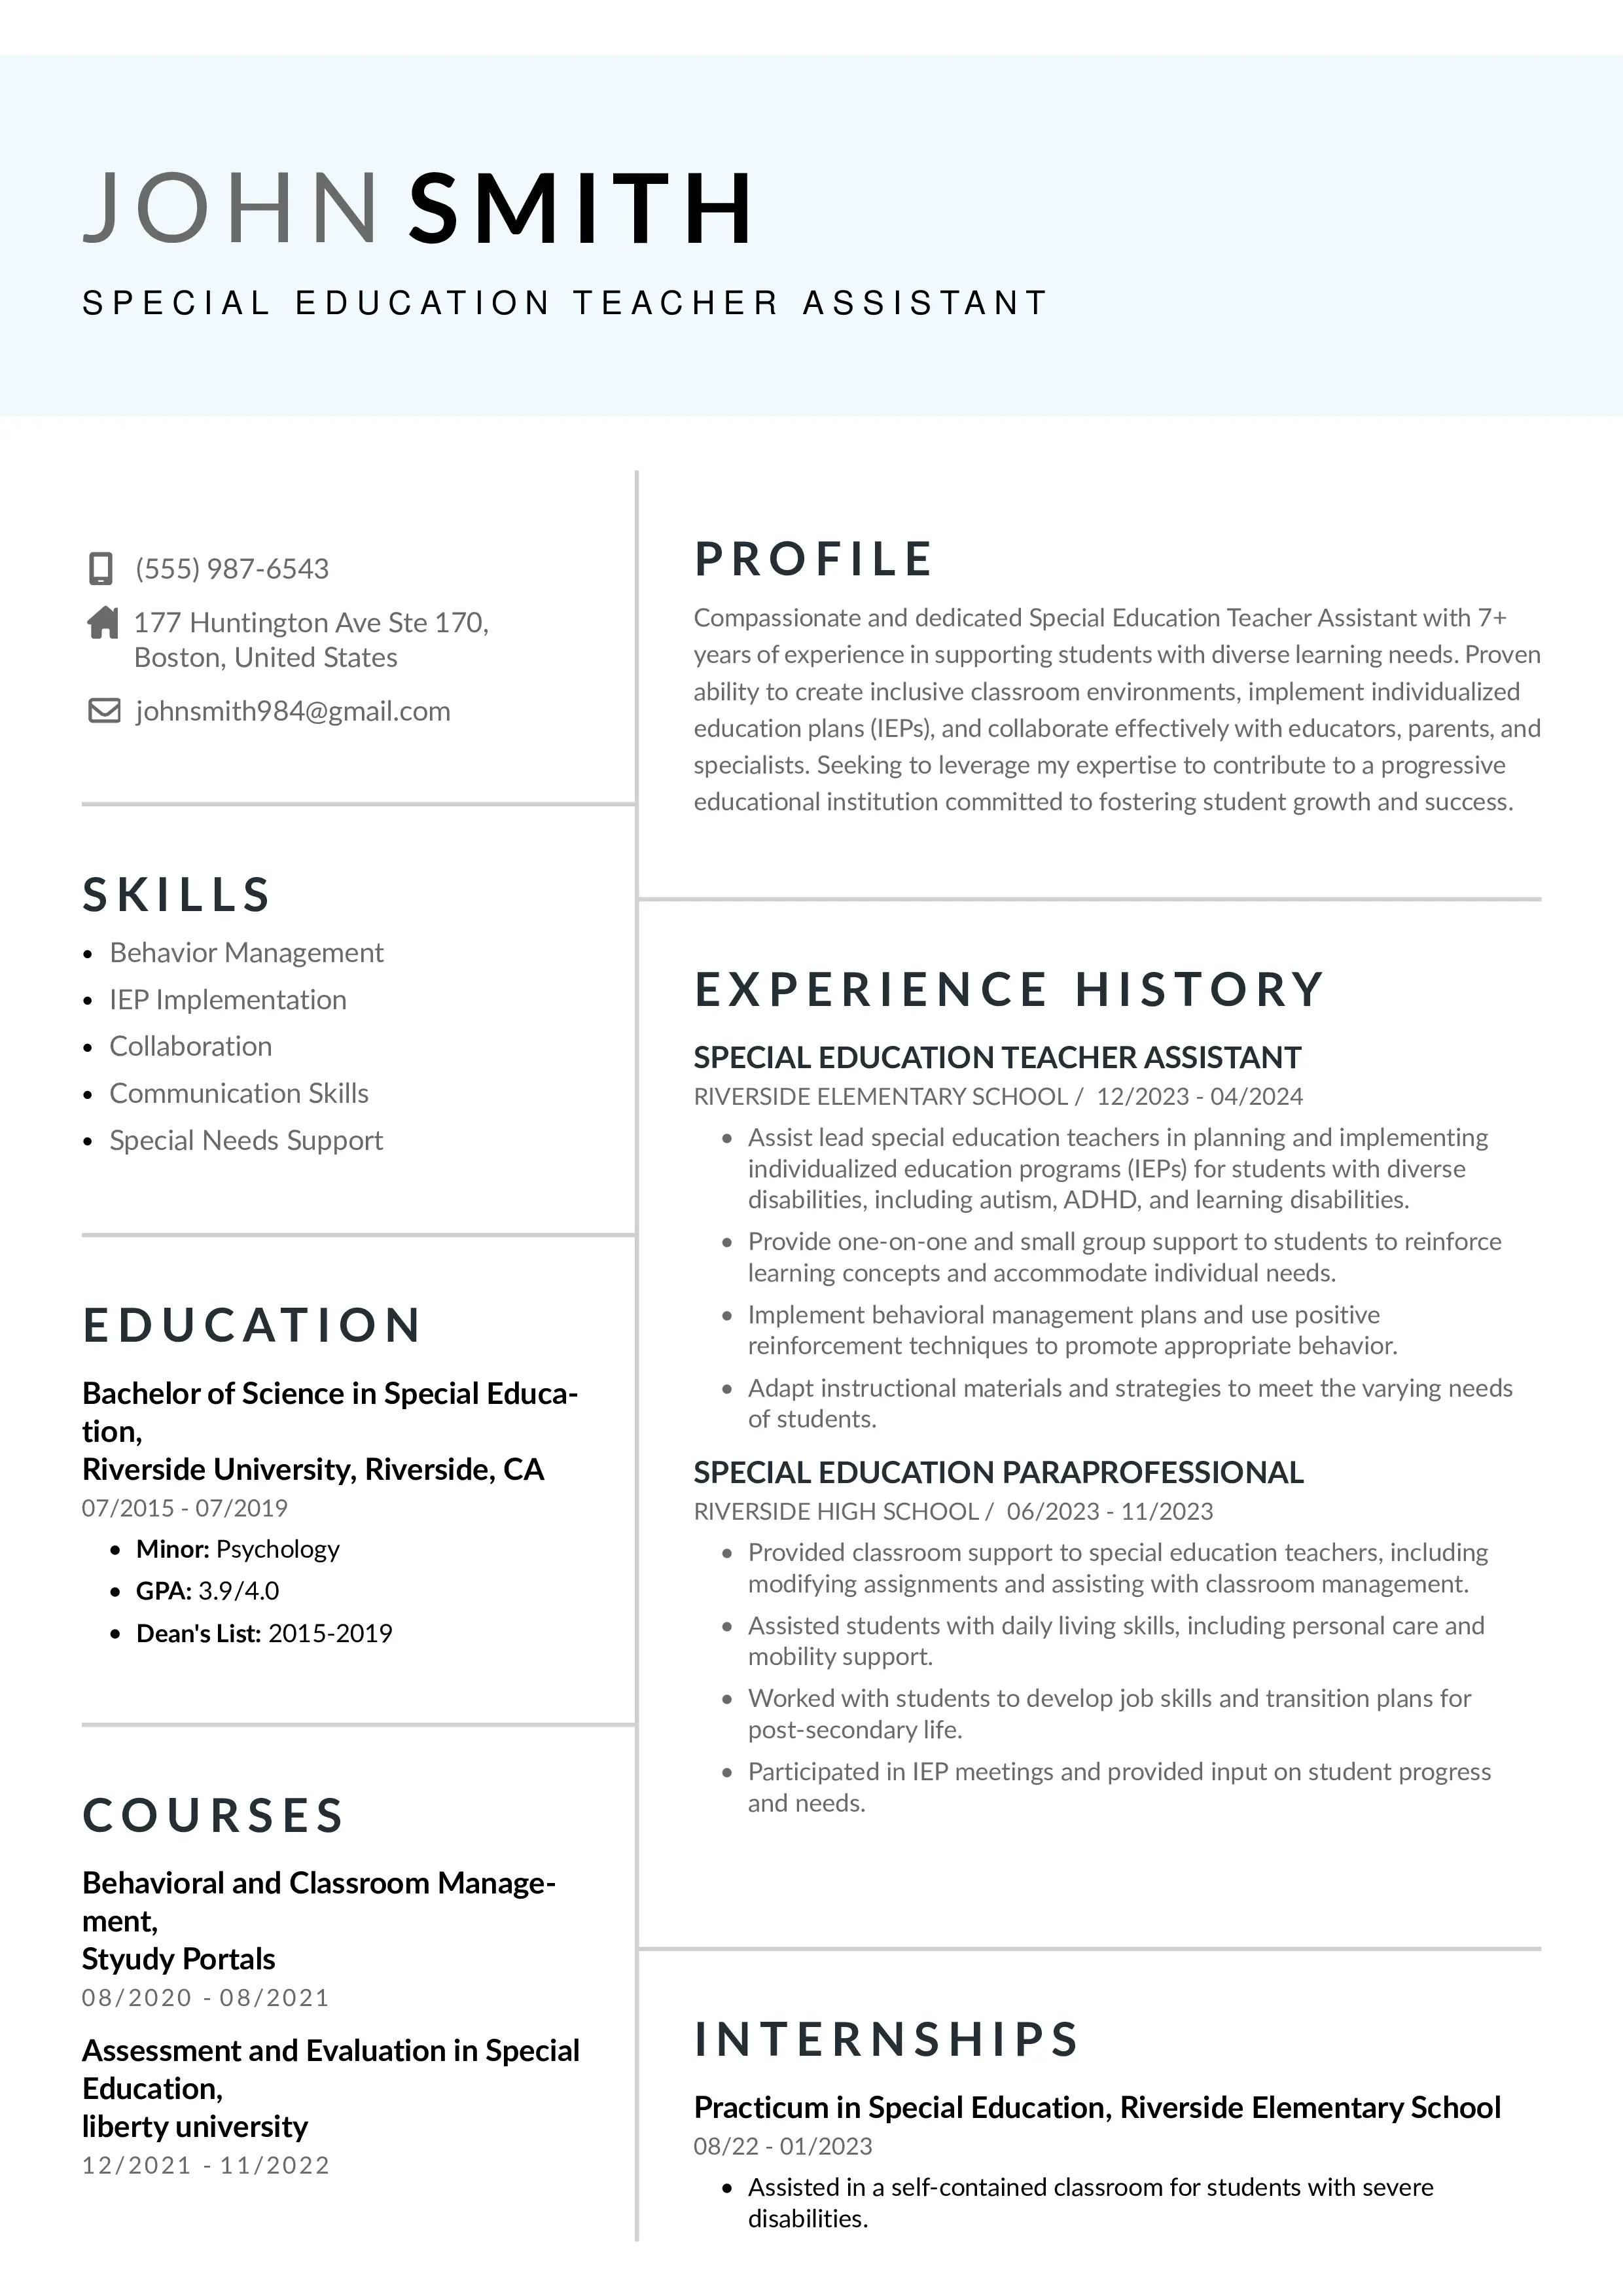 Resume example of special education teacher assistant resume using instaresume.io template.